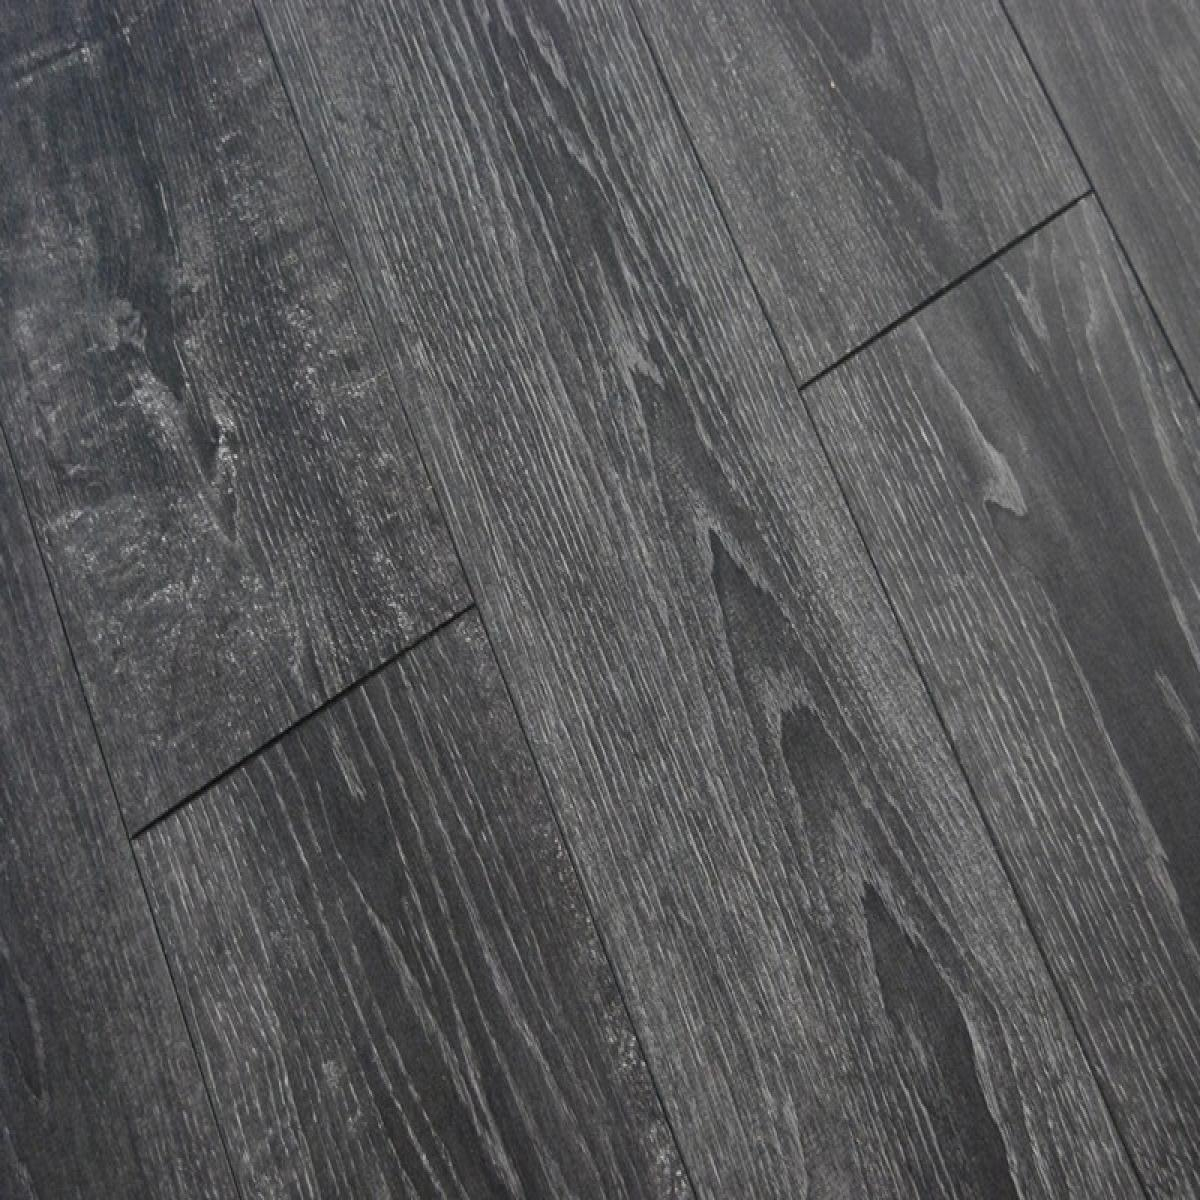 Atletic Black Laminate Flooring, Black Hardwood Laminate Flooring